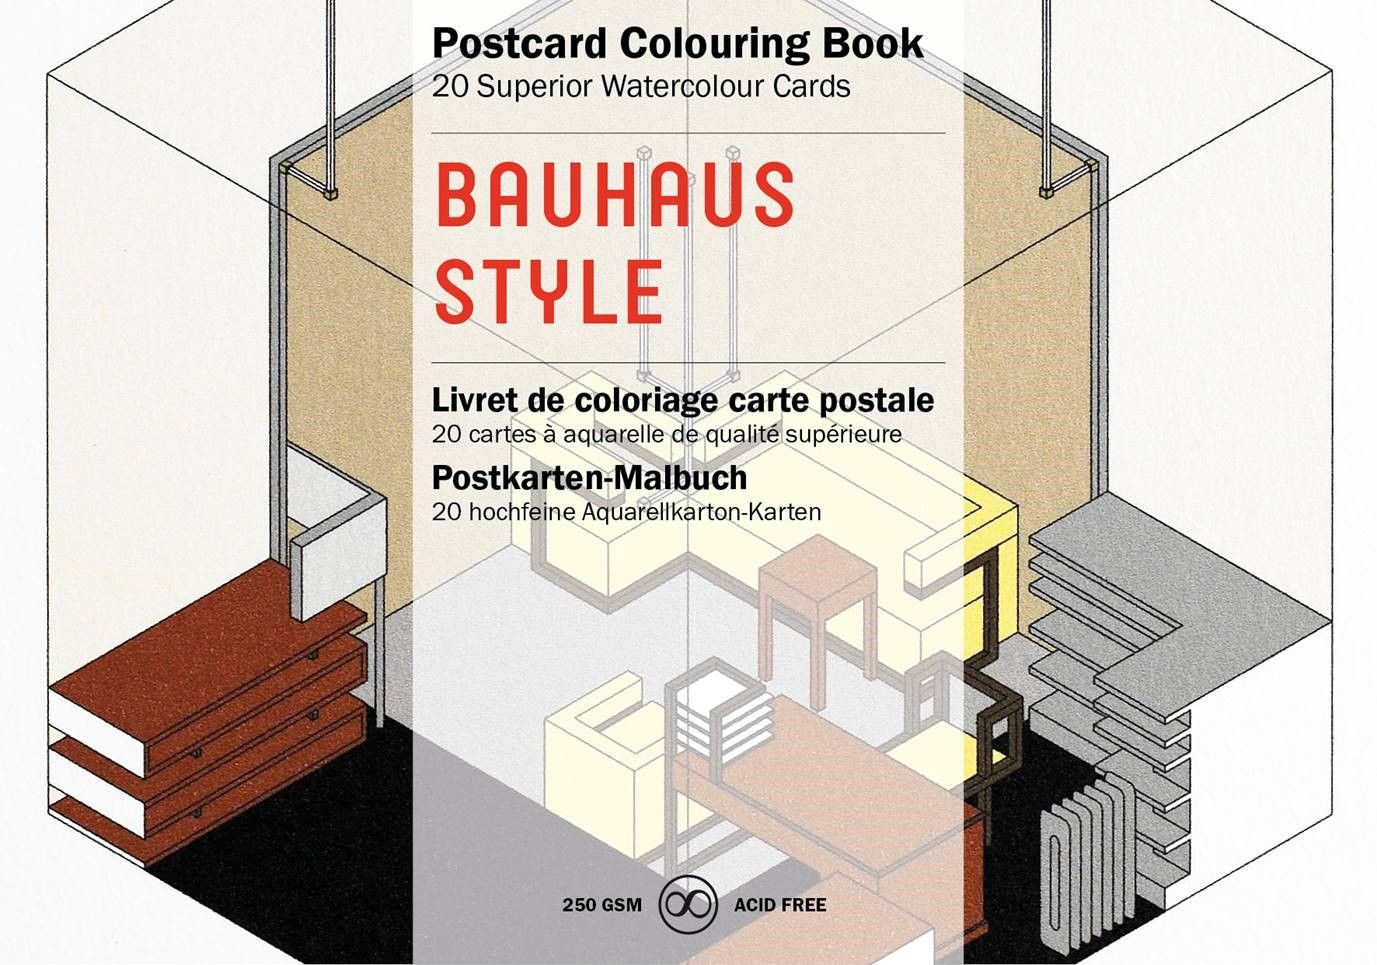 BAUHAUS STYLE: PEPIN POSTCARD COLOURING BOOK